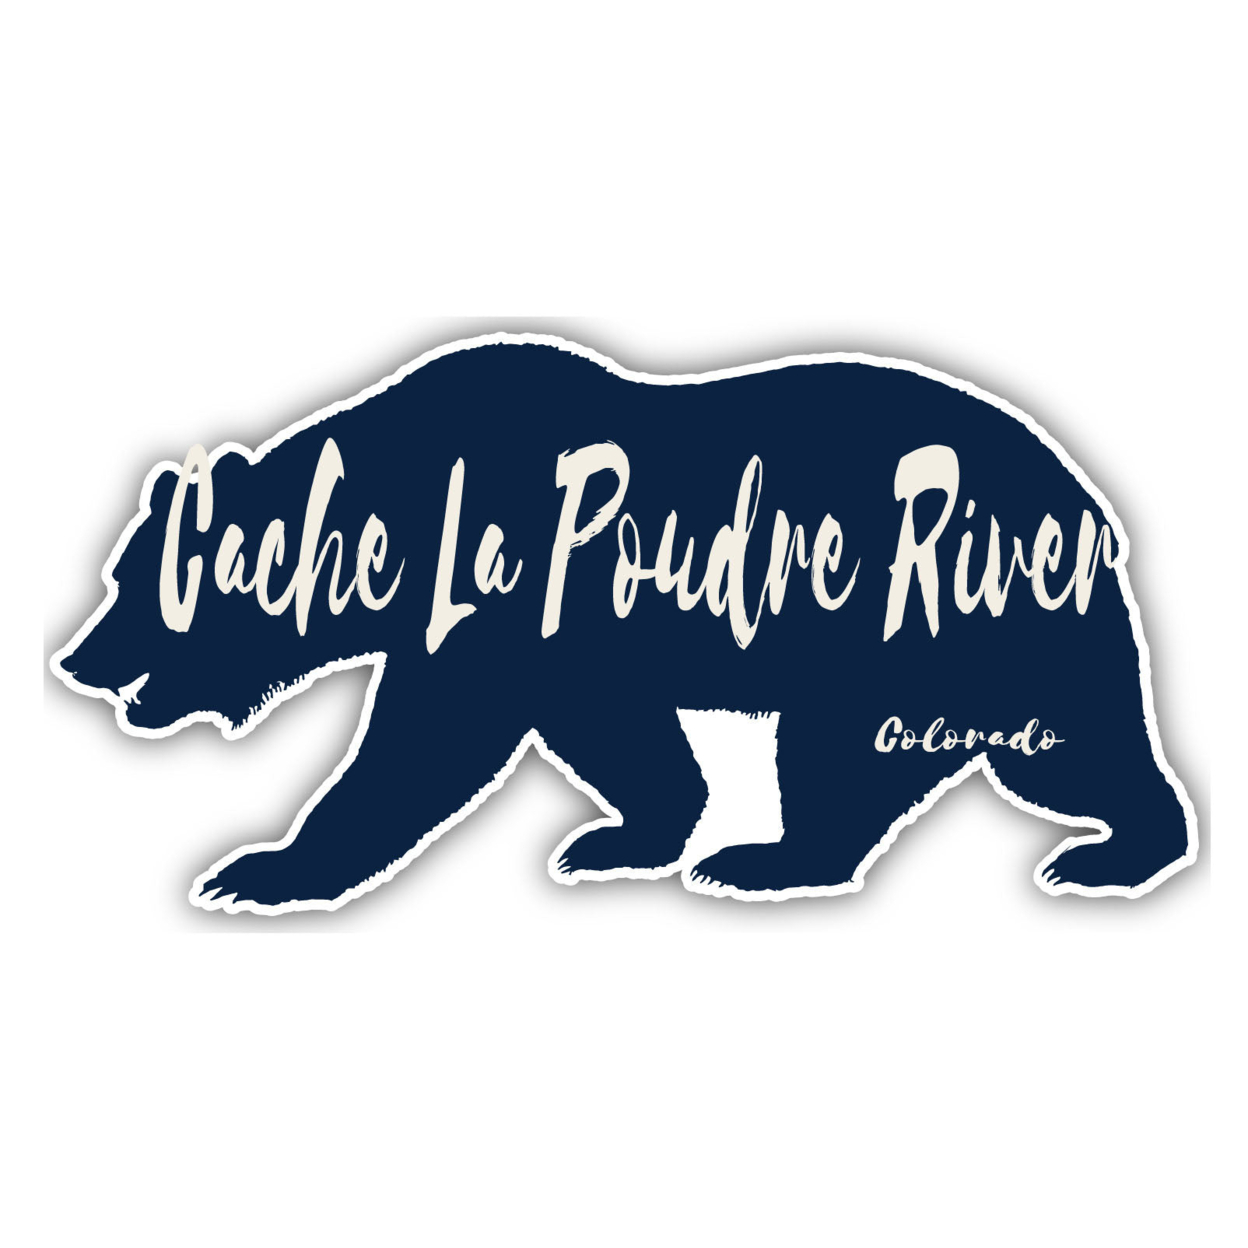 Cache La Poudre River Colorado Souvenir Decorative Stickers (Choose Theme And Size) - 4-Pack, 12-Inch, Bear